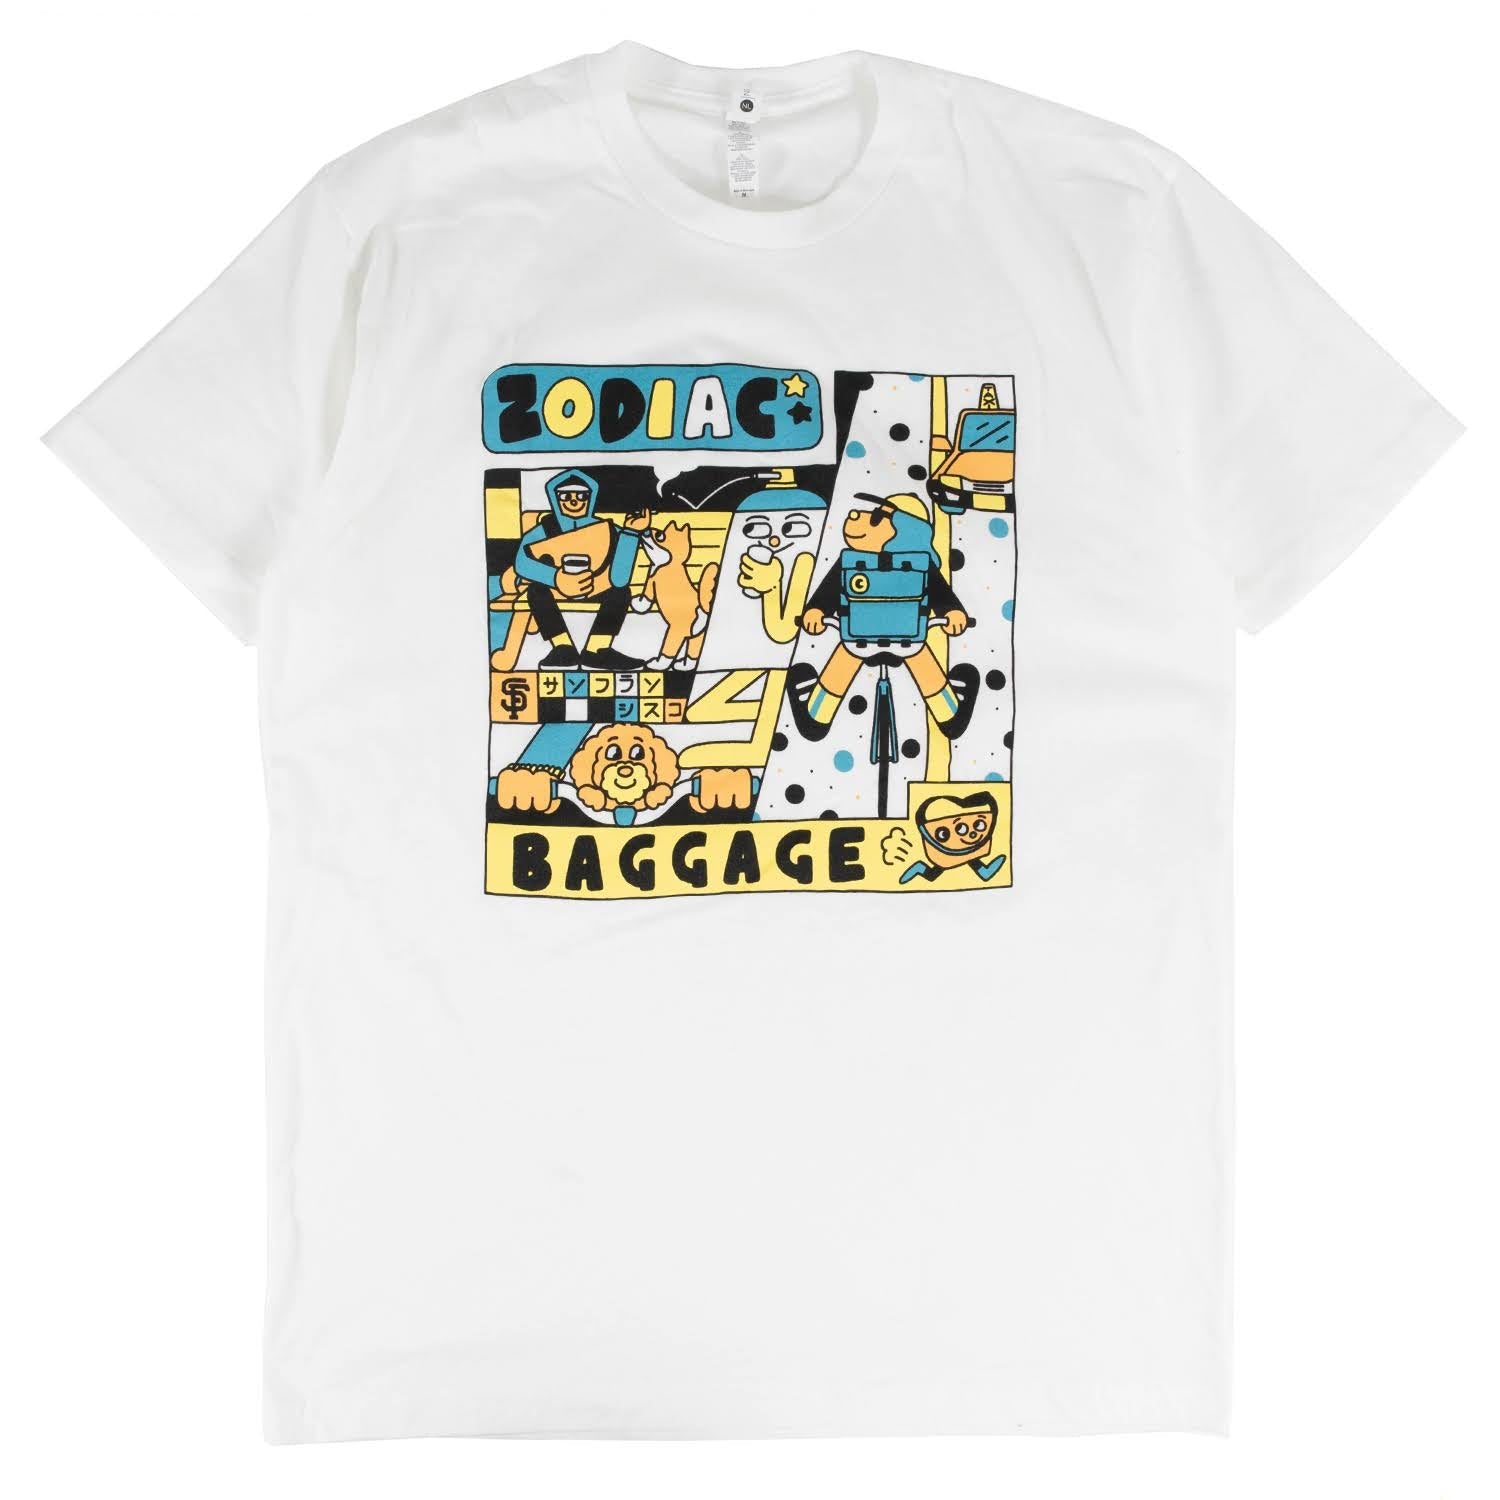 ZODIAC BAGGAGE Graphic T-Shirts by bouashiboy